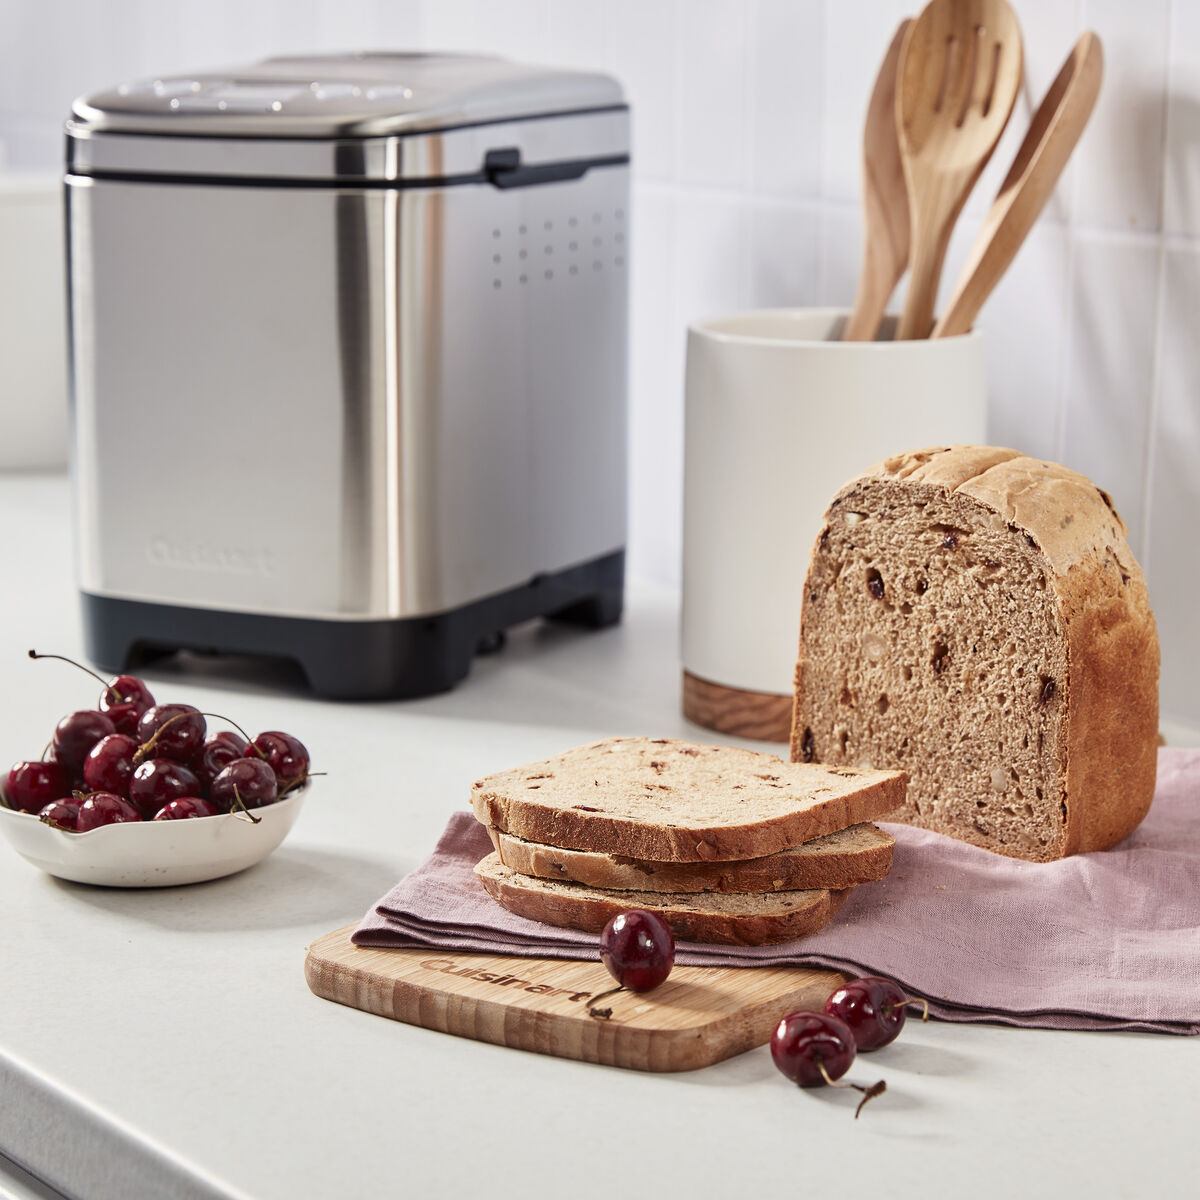 Cuisinart Compact Automatic Bread Maker